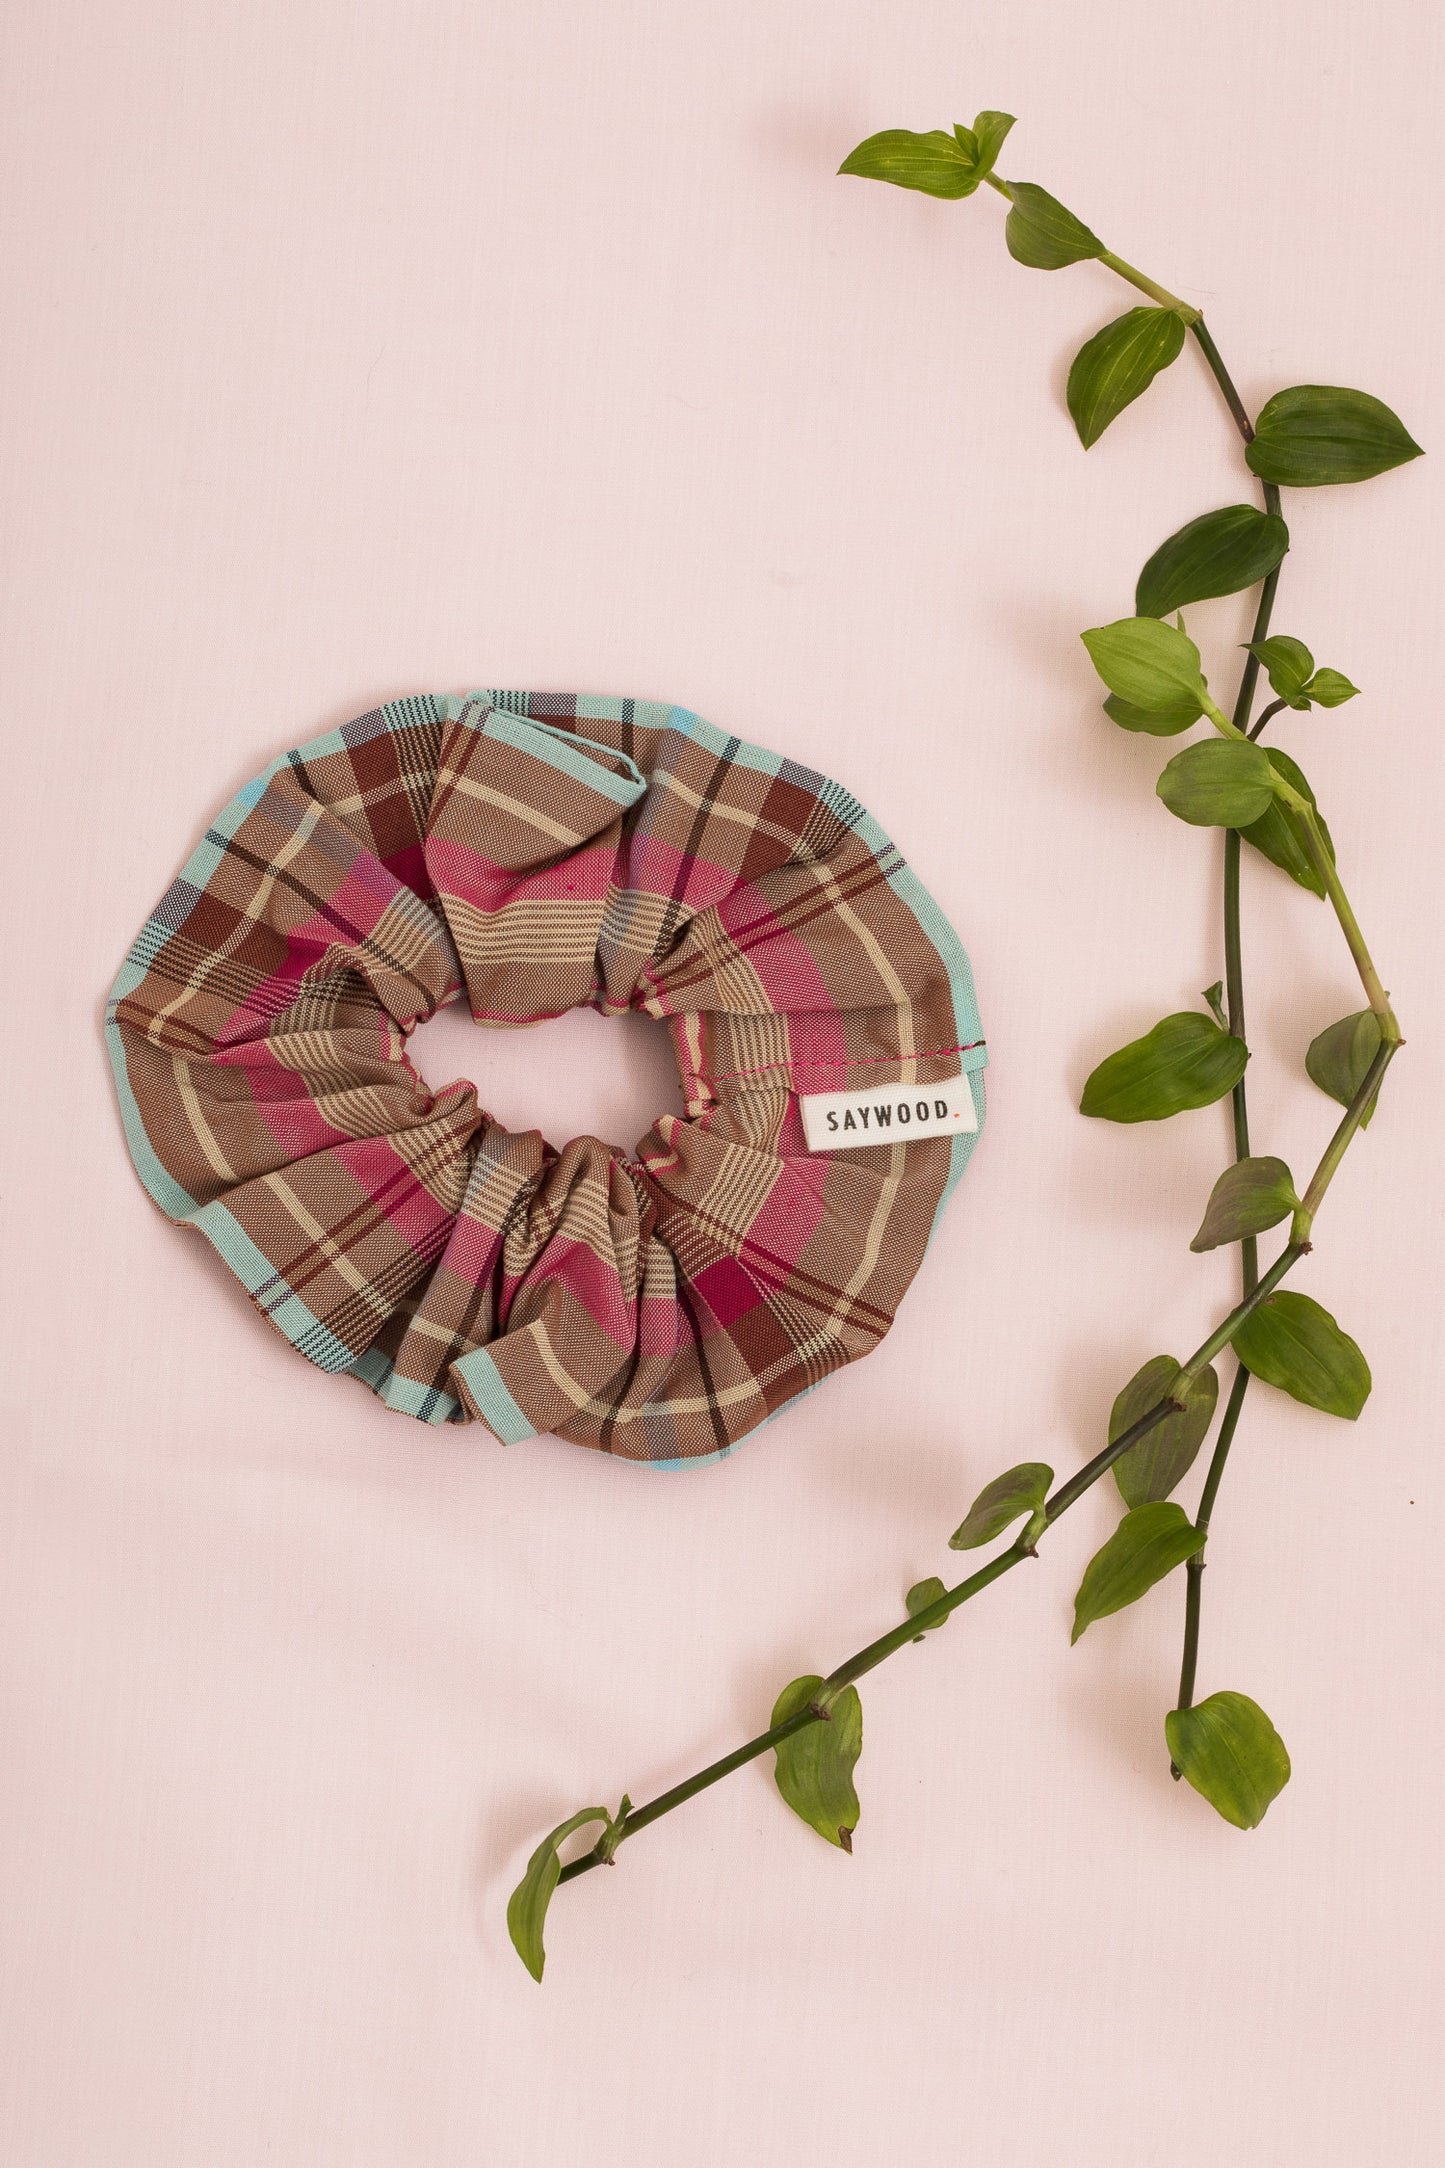 Pink Check Silky Headband & Scrunchie Gift Set